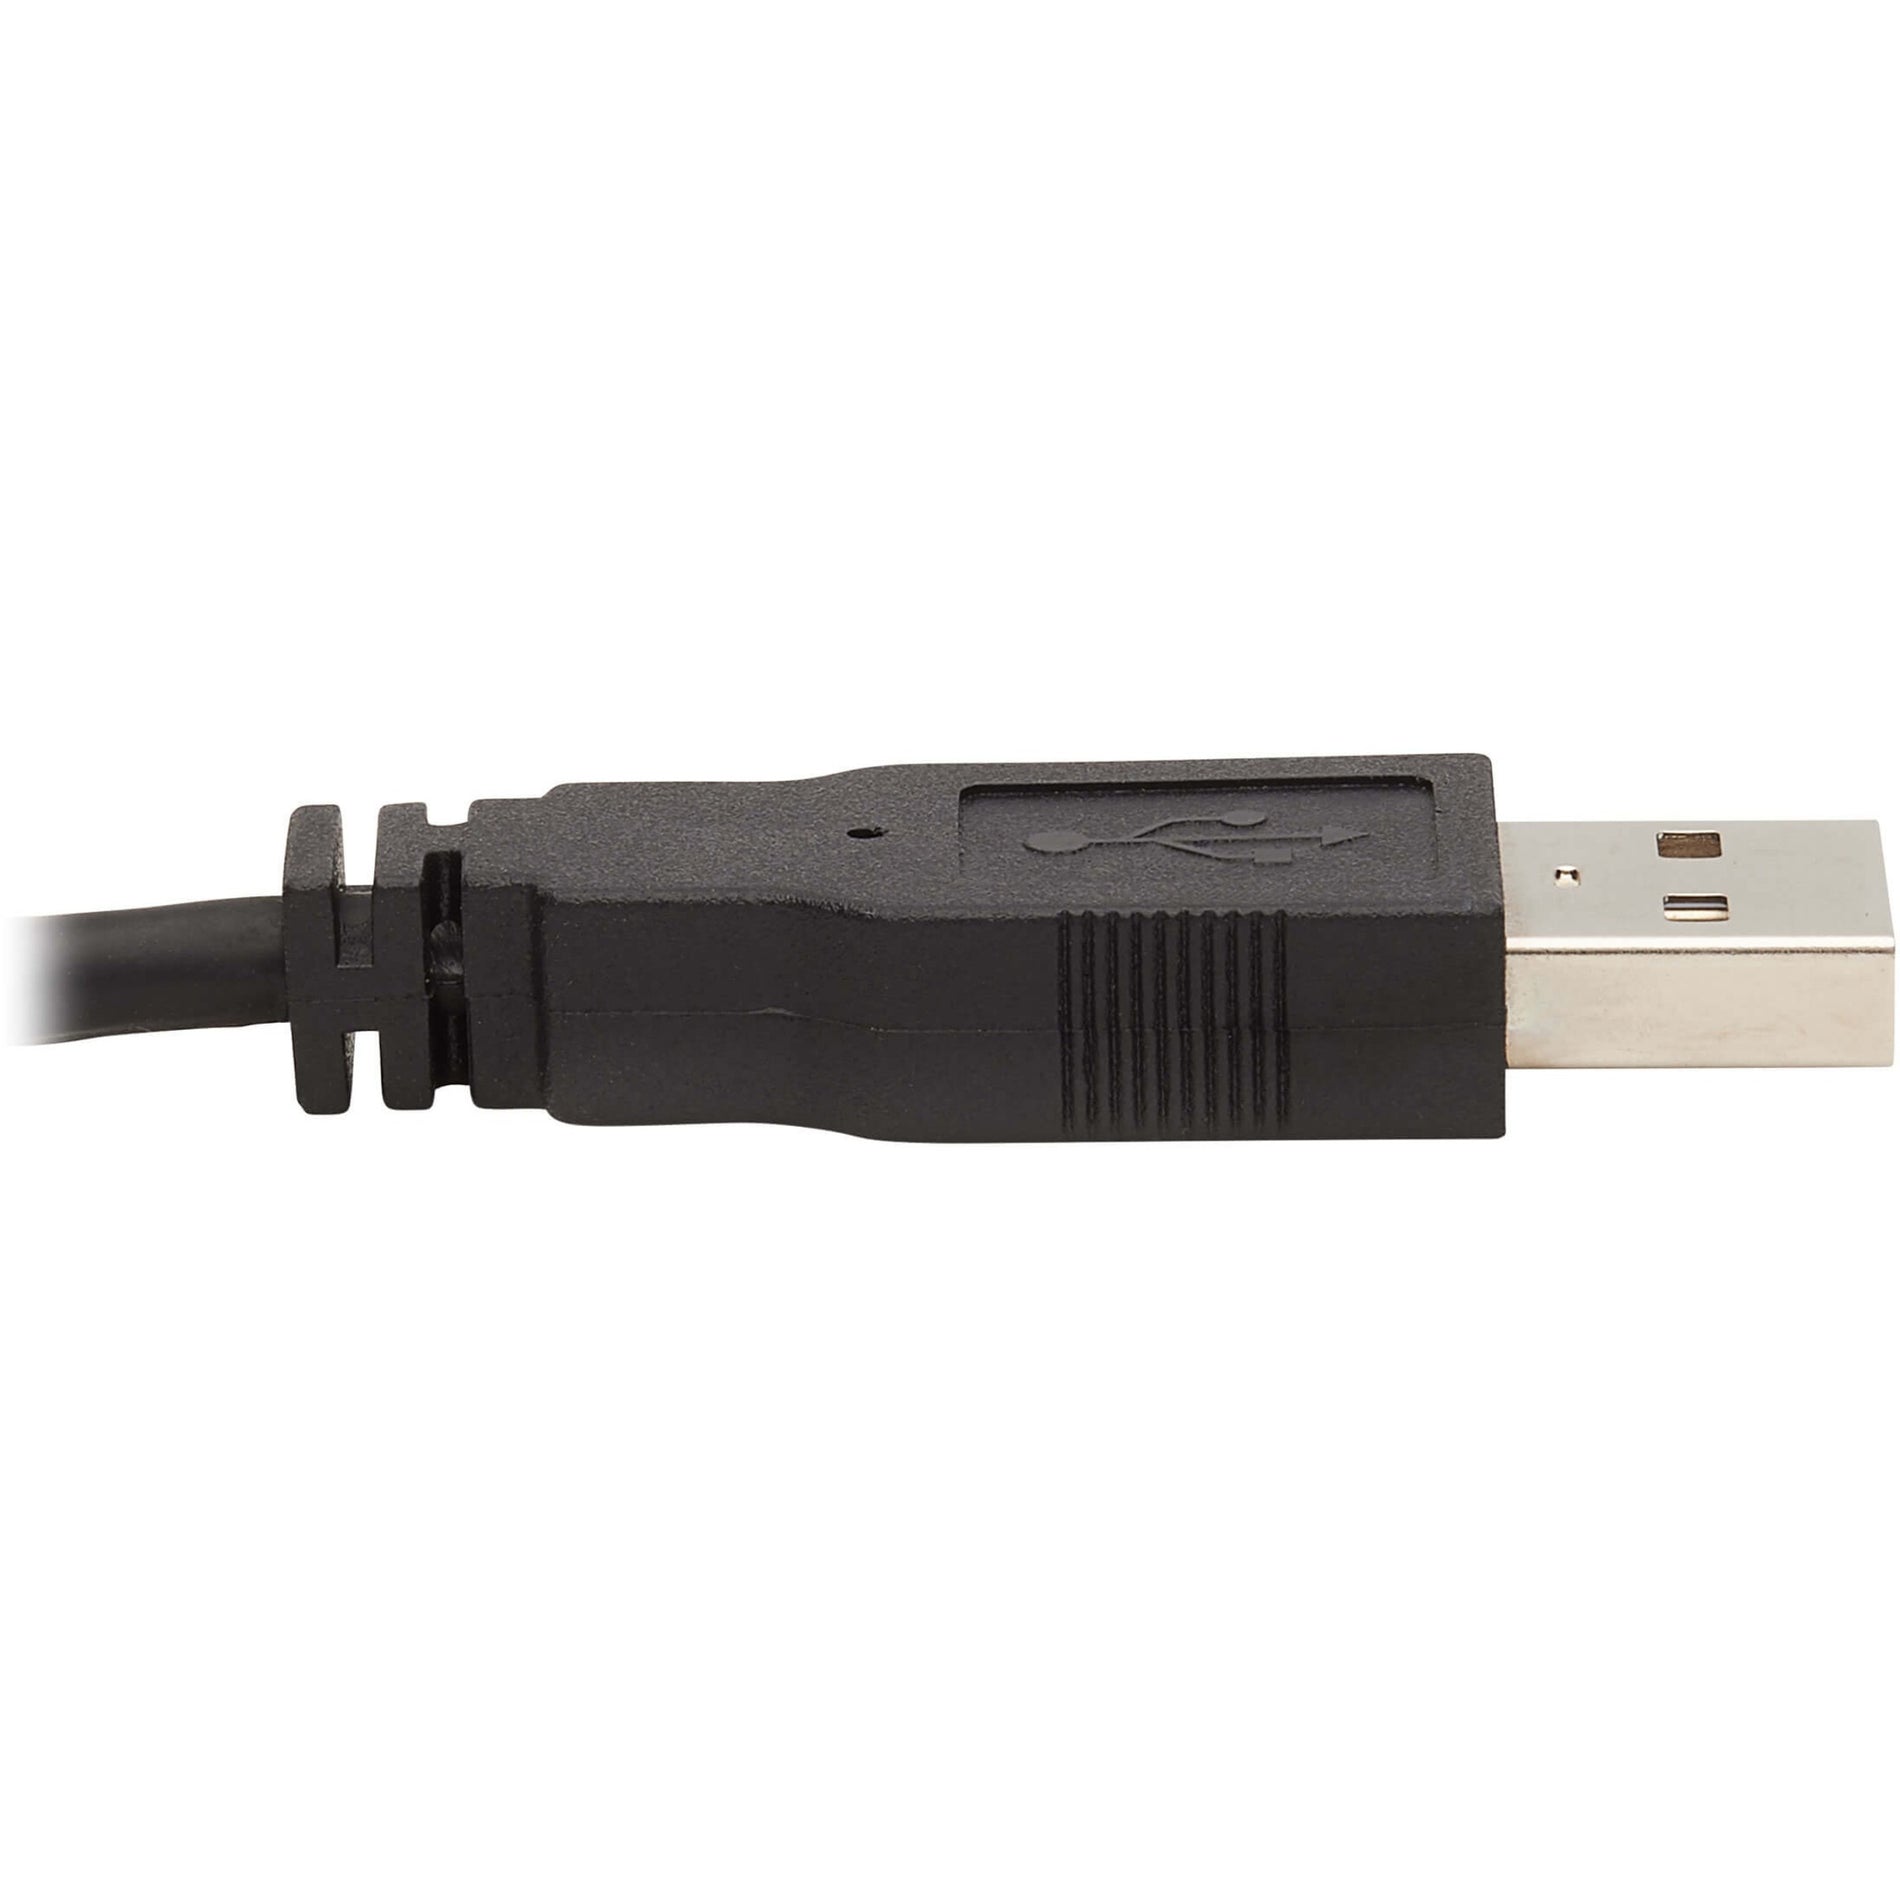 Tripp Lite P784-006-DV KVM ケーブル、6 フィート、プラグアンドプレイ、480 Mbit/s、2560 × 1600、DVI-I (デュアルリンク) デジタルビデオ、USB 2.0 タイプ A/B、ステレオオーディオ、ライフタイム保証。ブランド名：トリップライト。